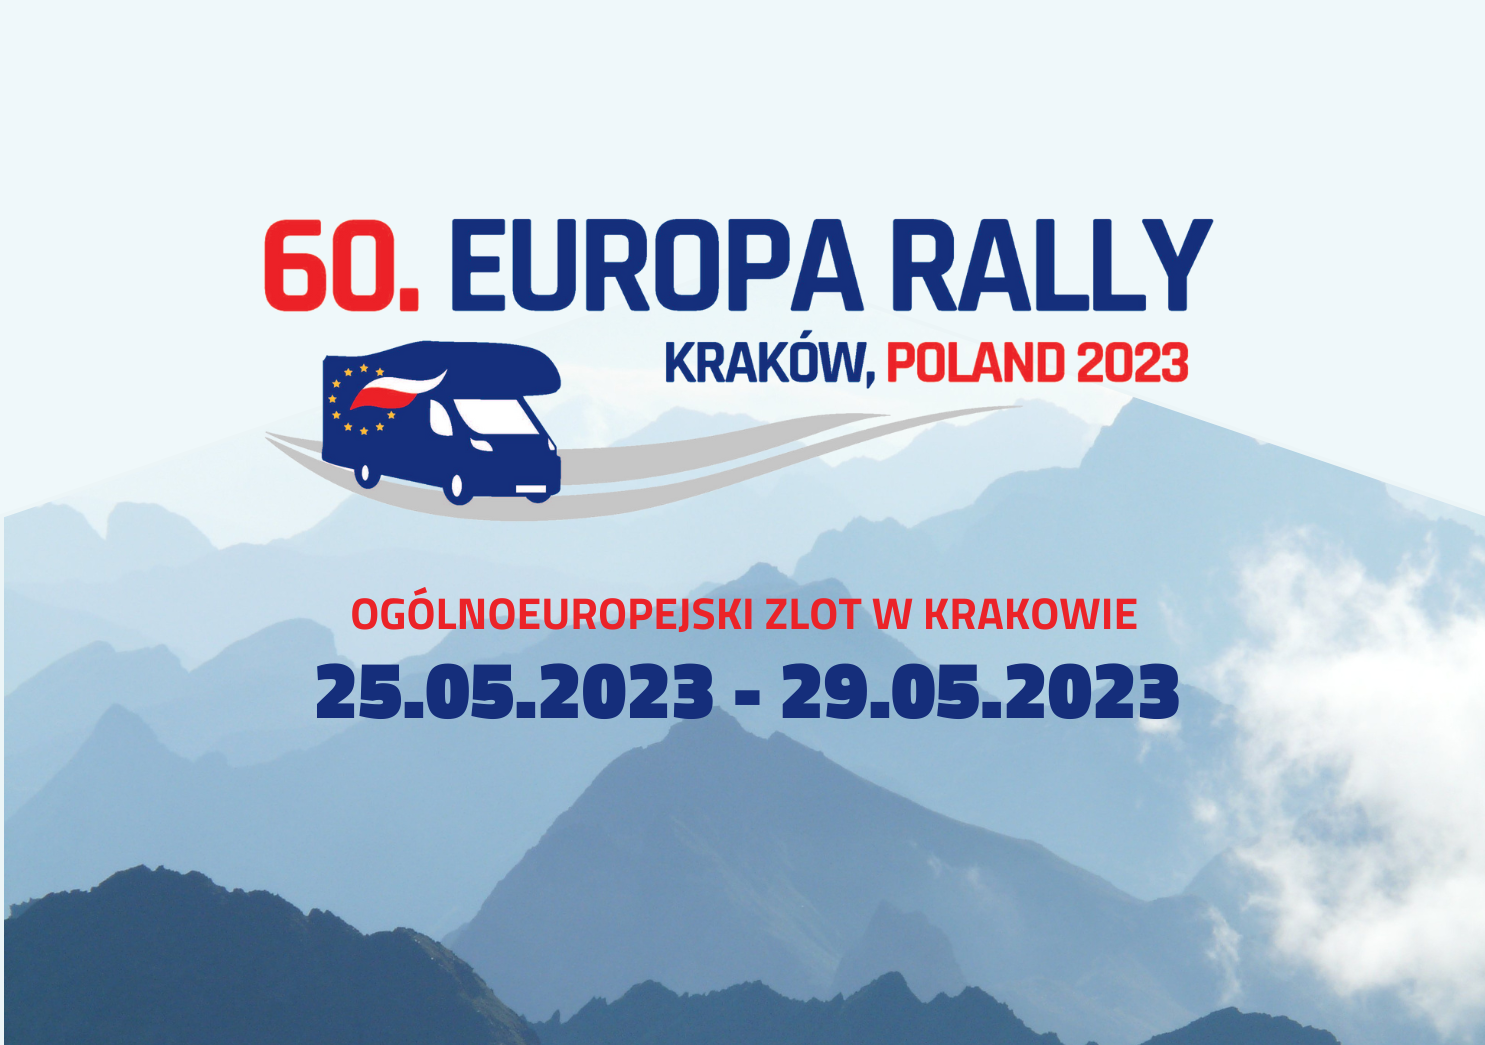 Europe Rally 2023, Krakow, May 25-29, 2023 – main image